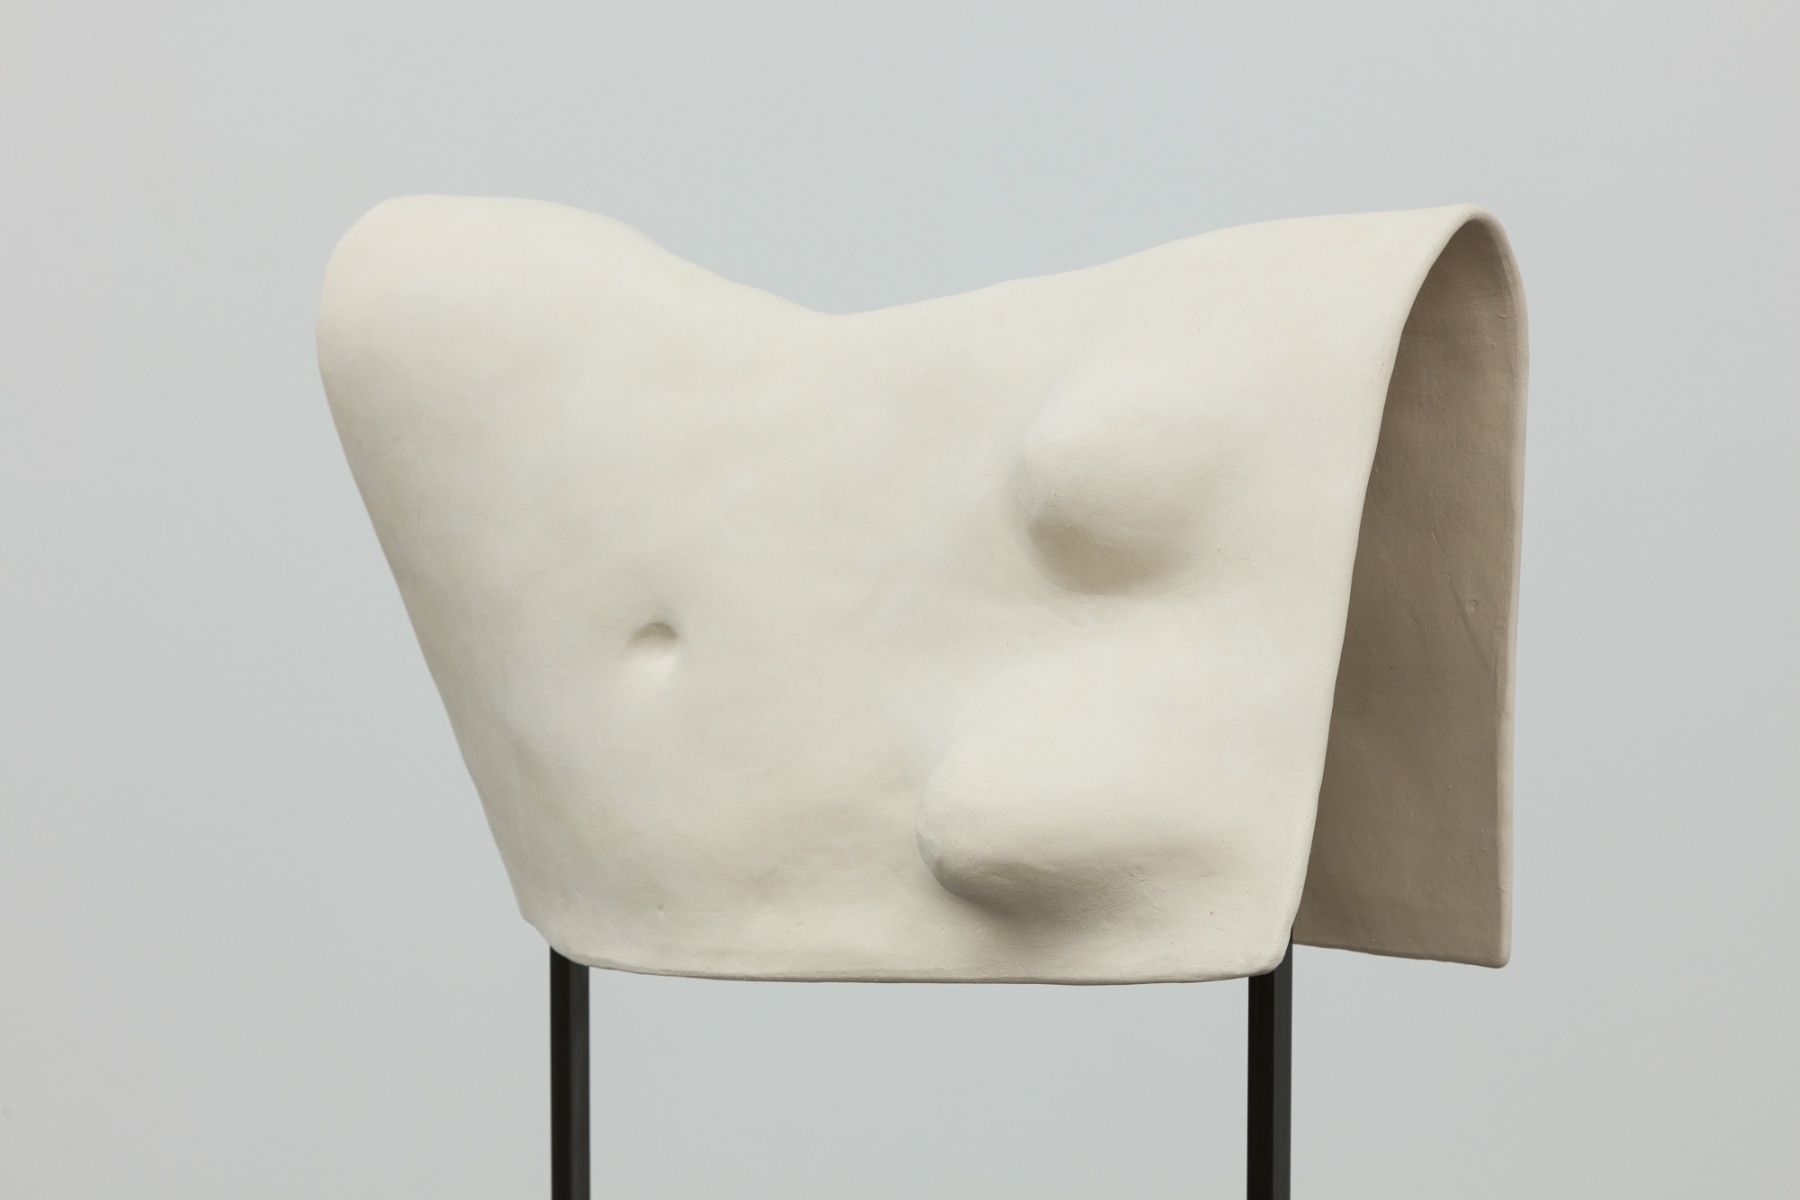 Elizabeth Jaeger ceramic and steel sculpture, woman's torso